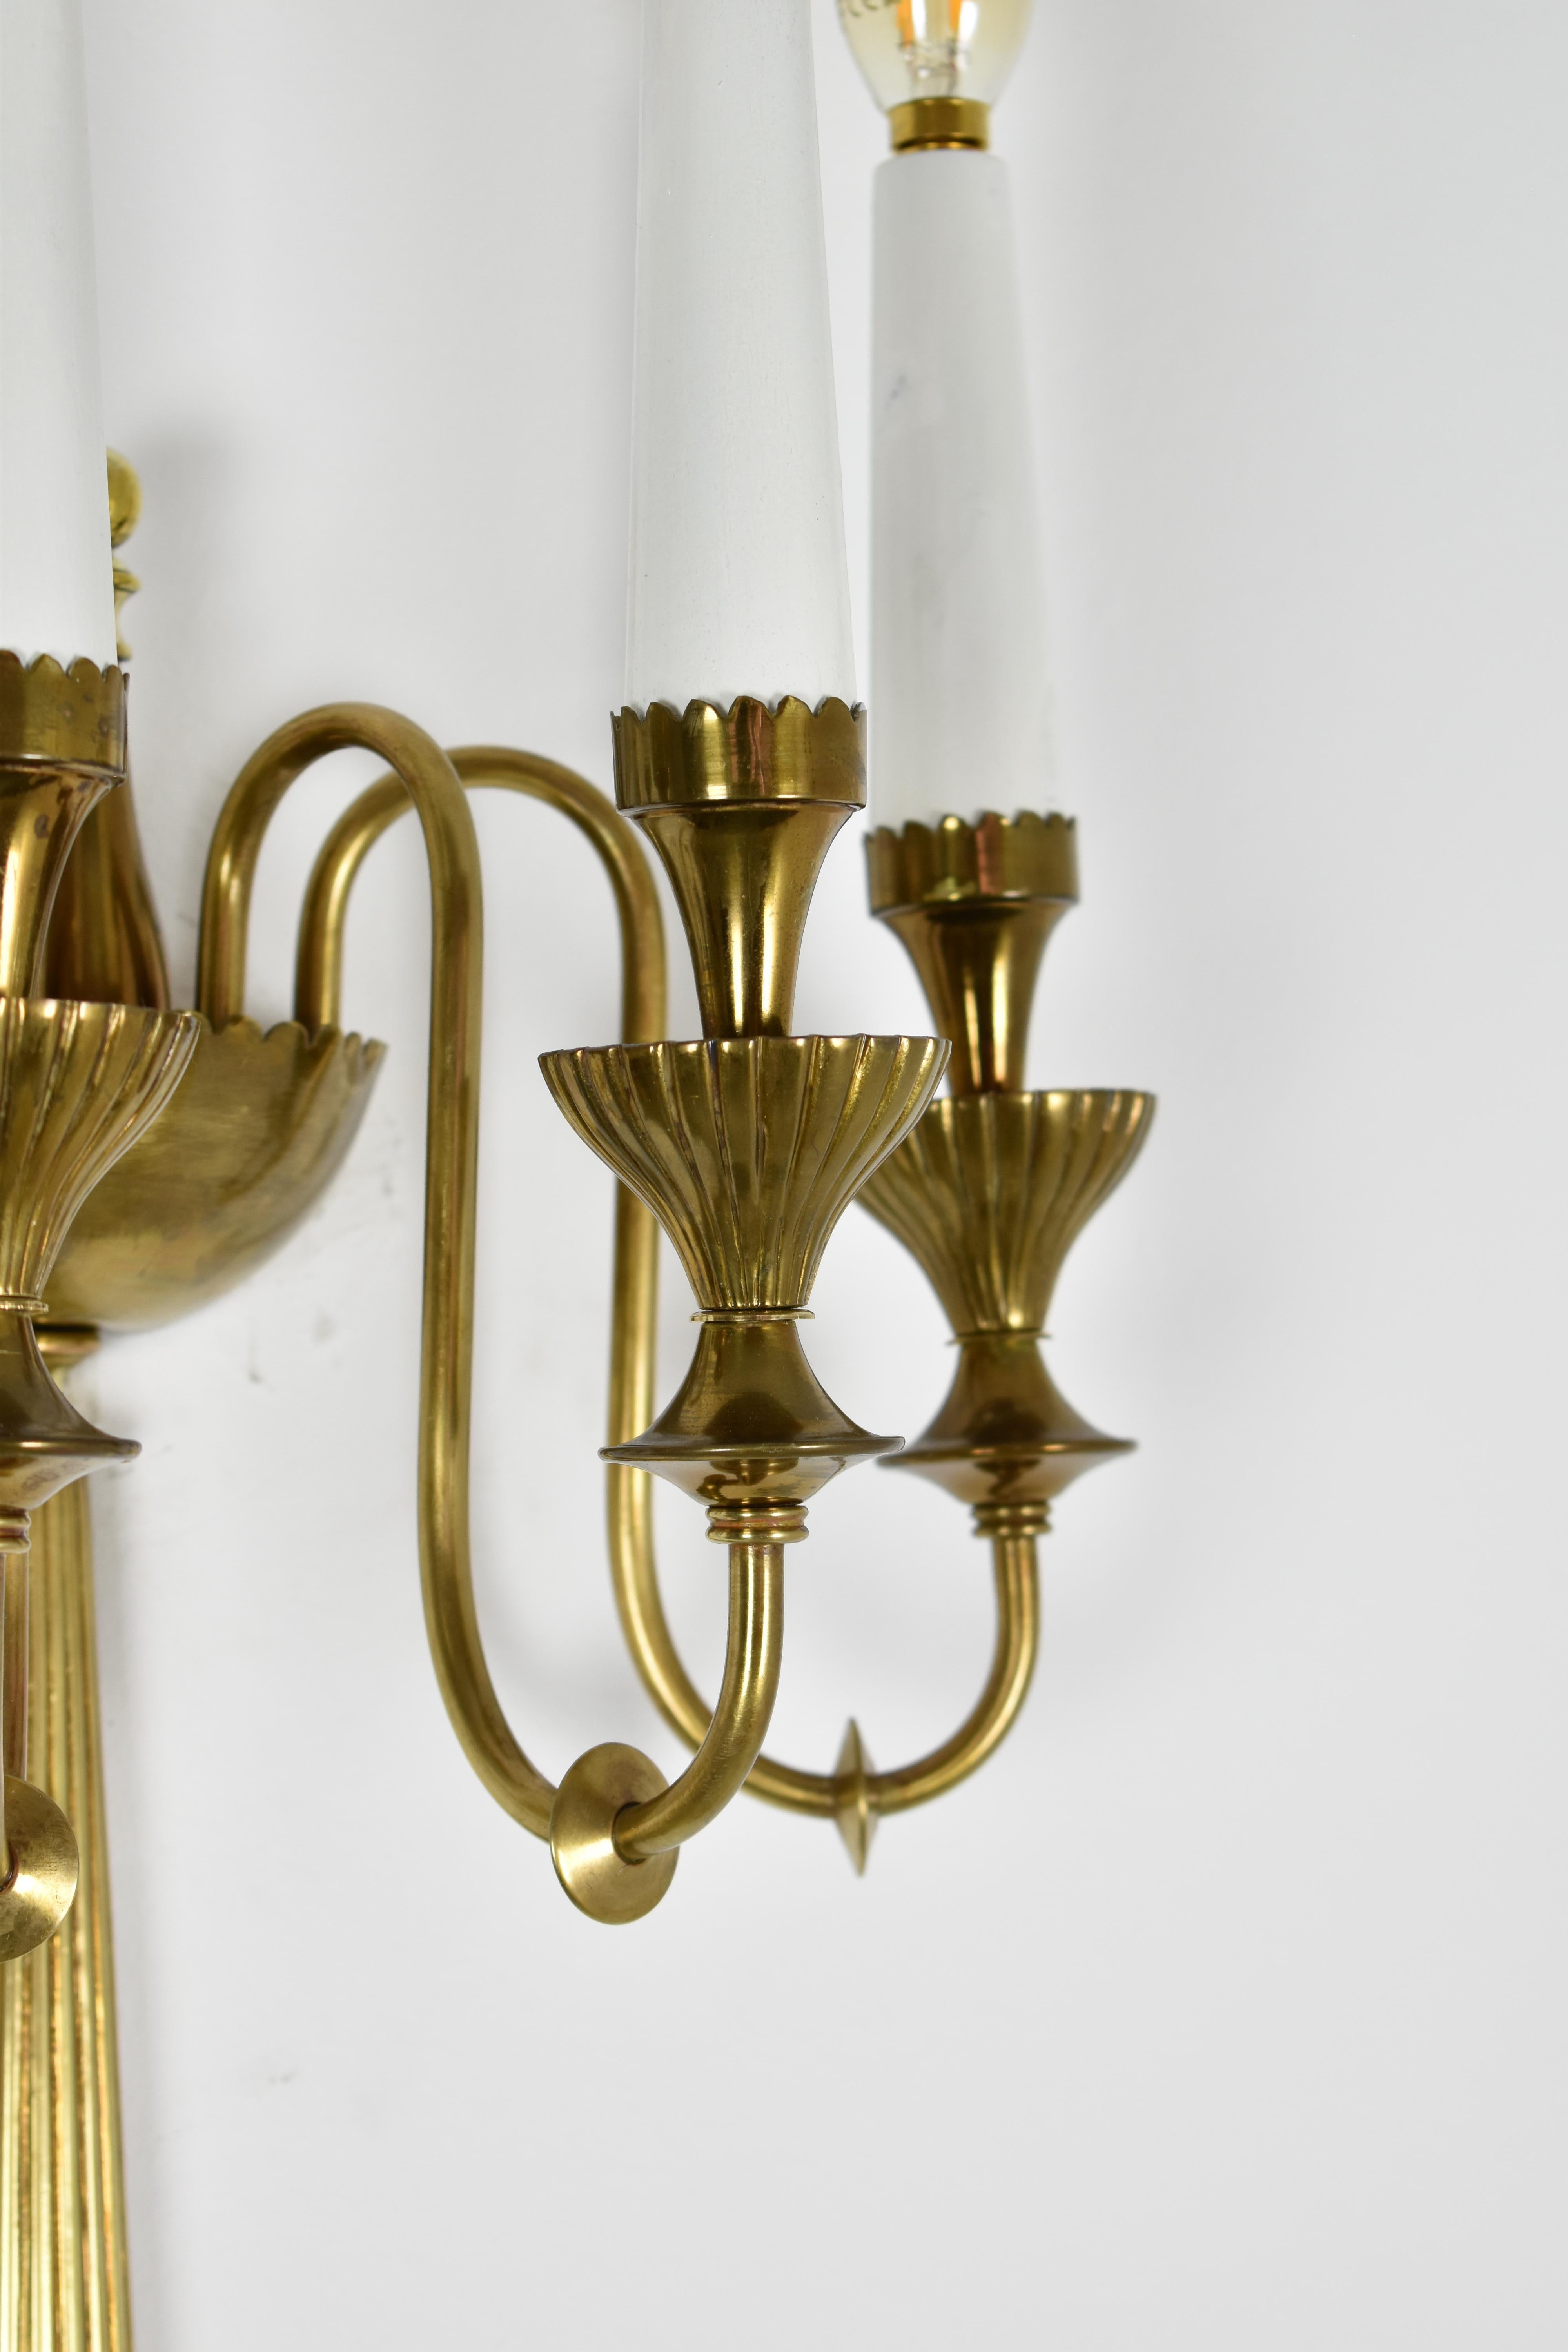 Pair of Four-Light Italian Brass Candelabra Sconces, 1940s For Sale 2